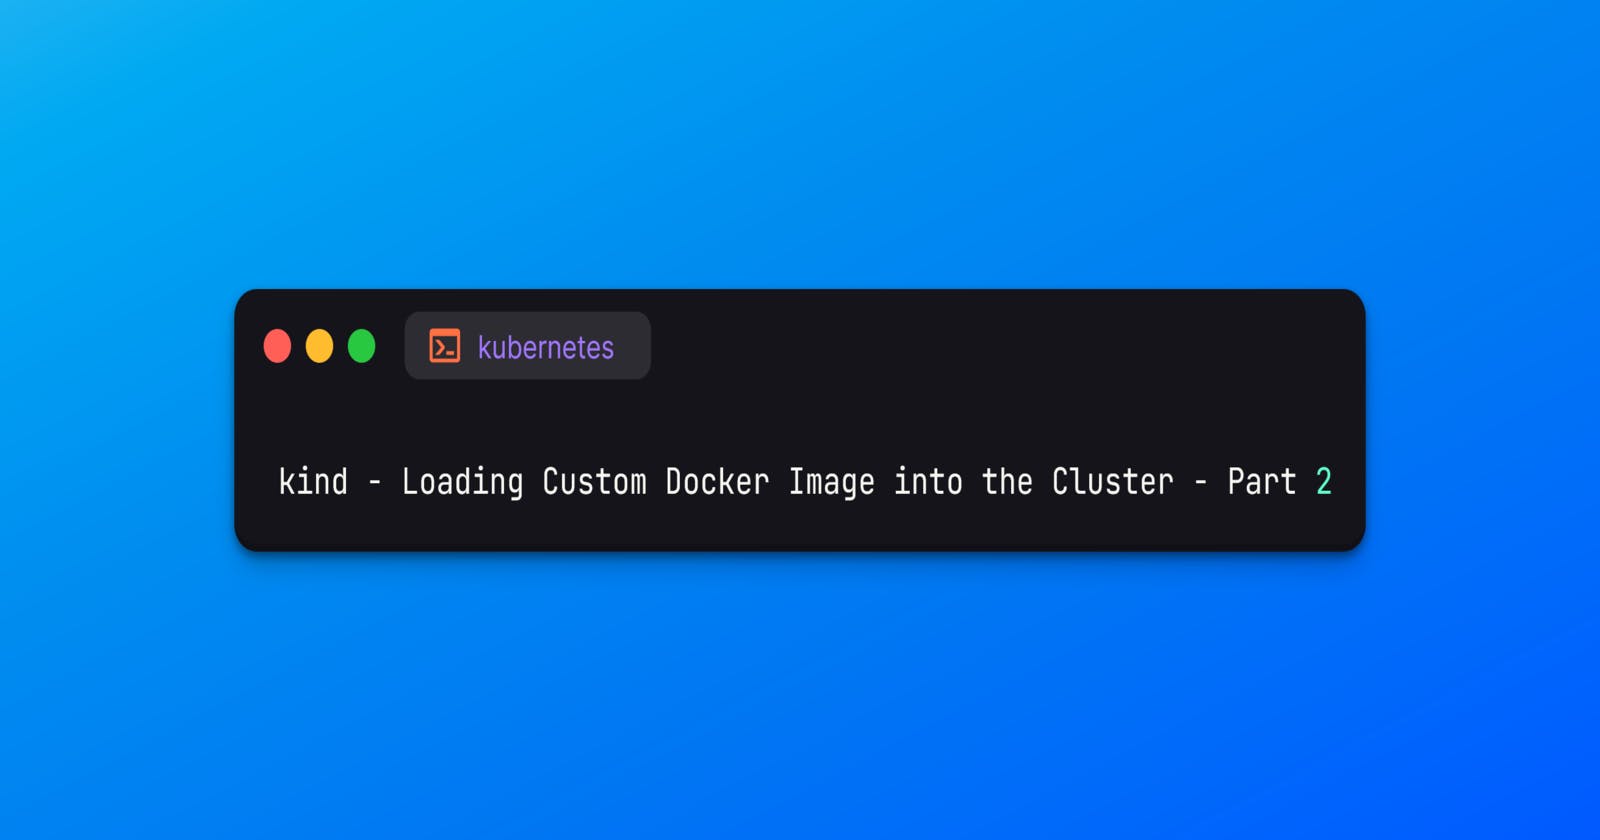 kind - Loading Custom Docker Image into the Cluster - Part 2